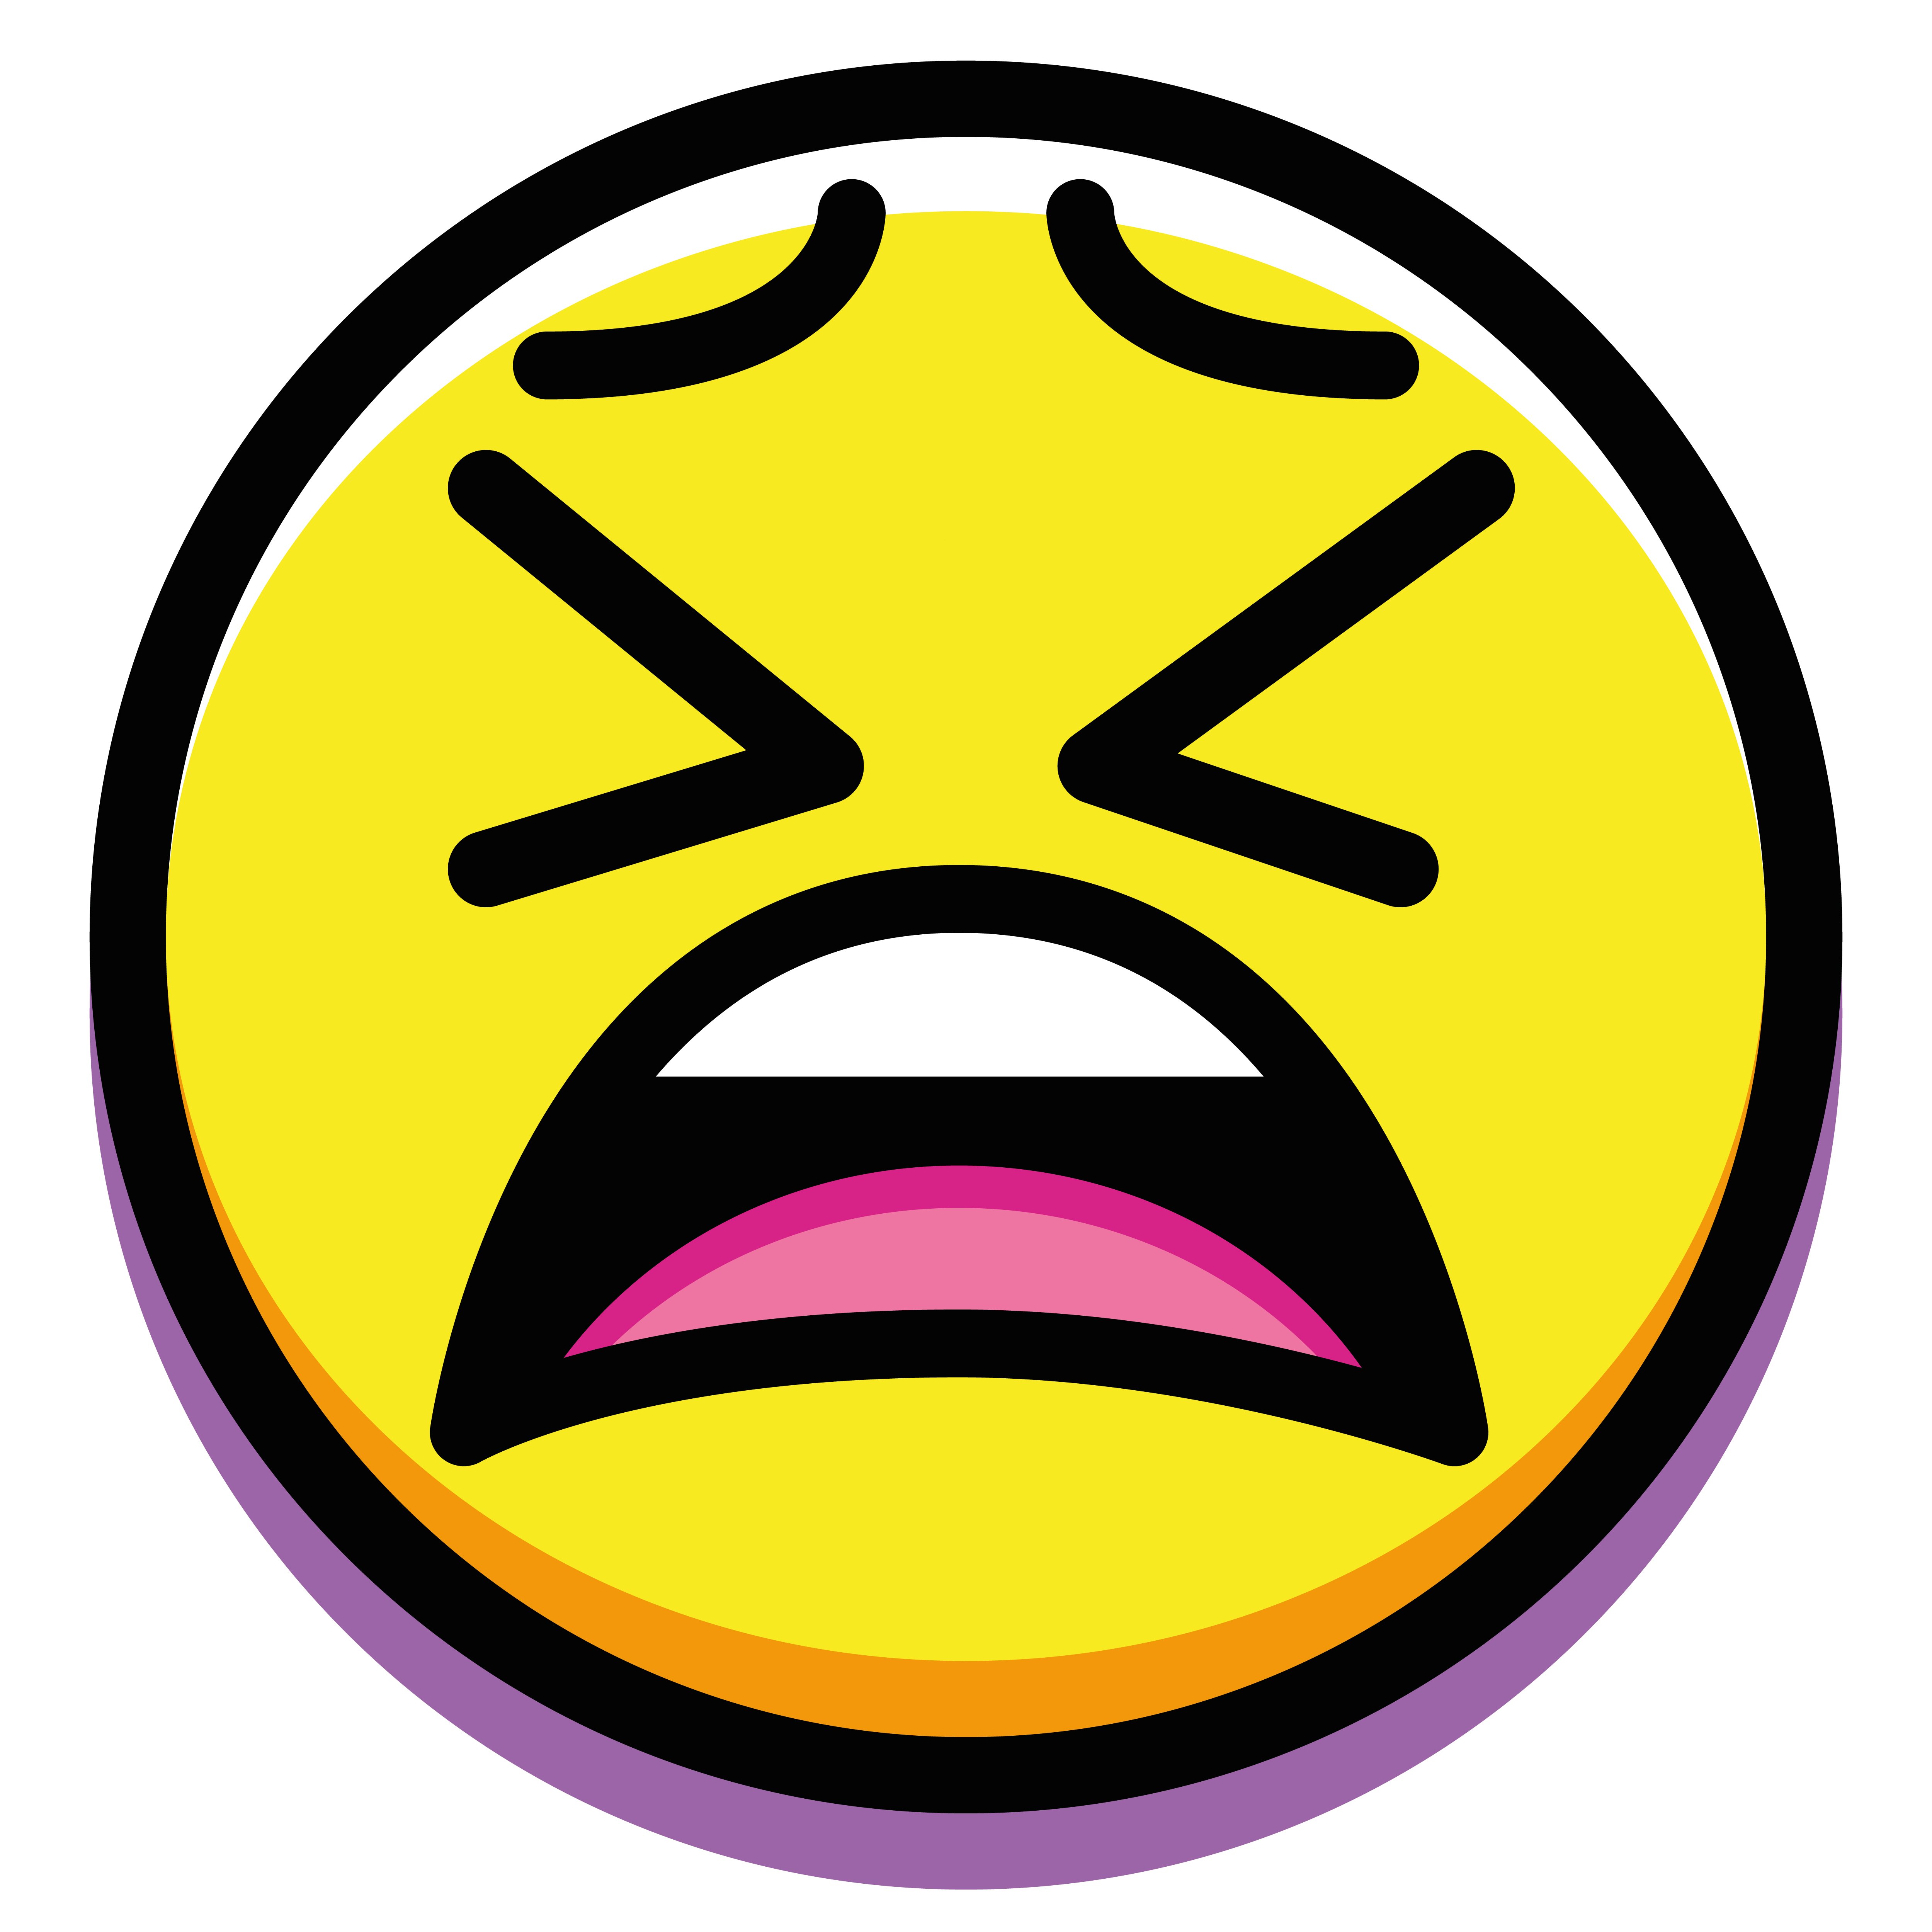 distraught face emoji